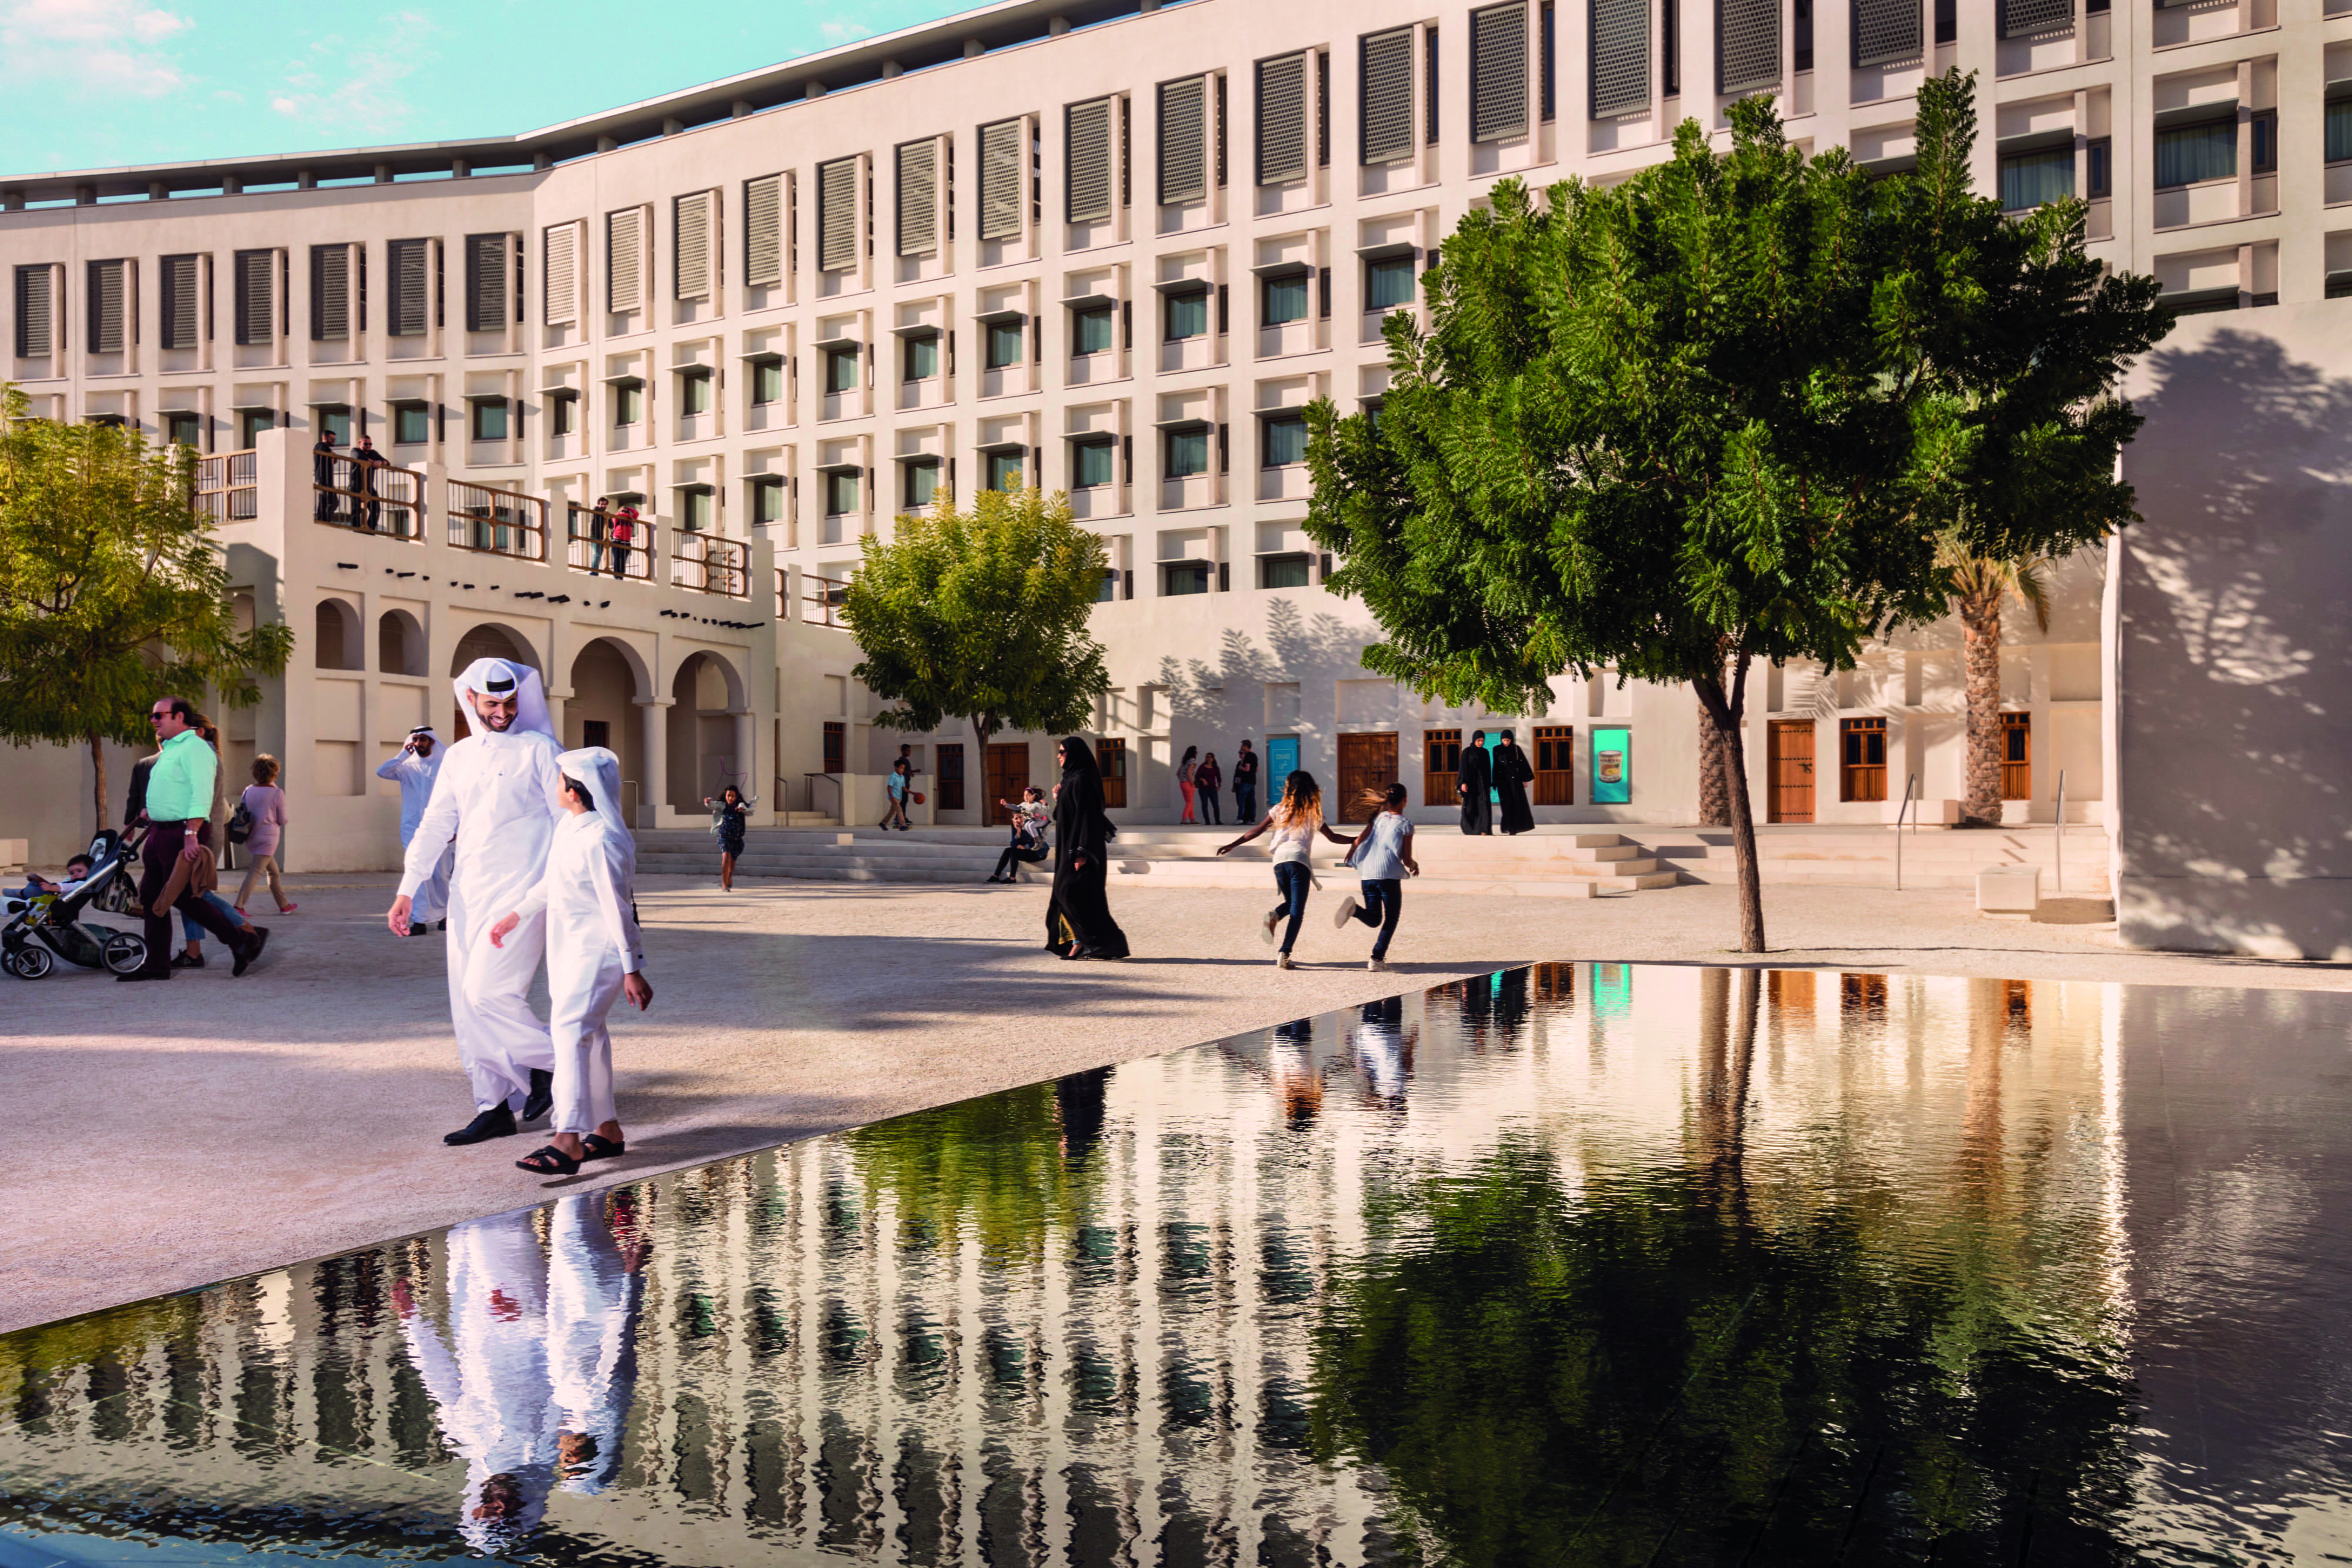 Msheireb Downtown Doha: Where traditions meet cutting-edge development - Q Life